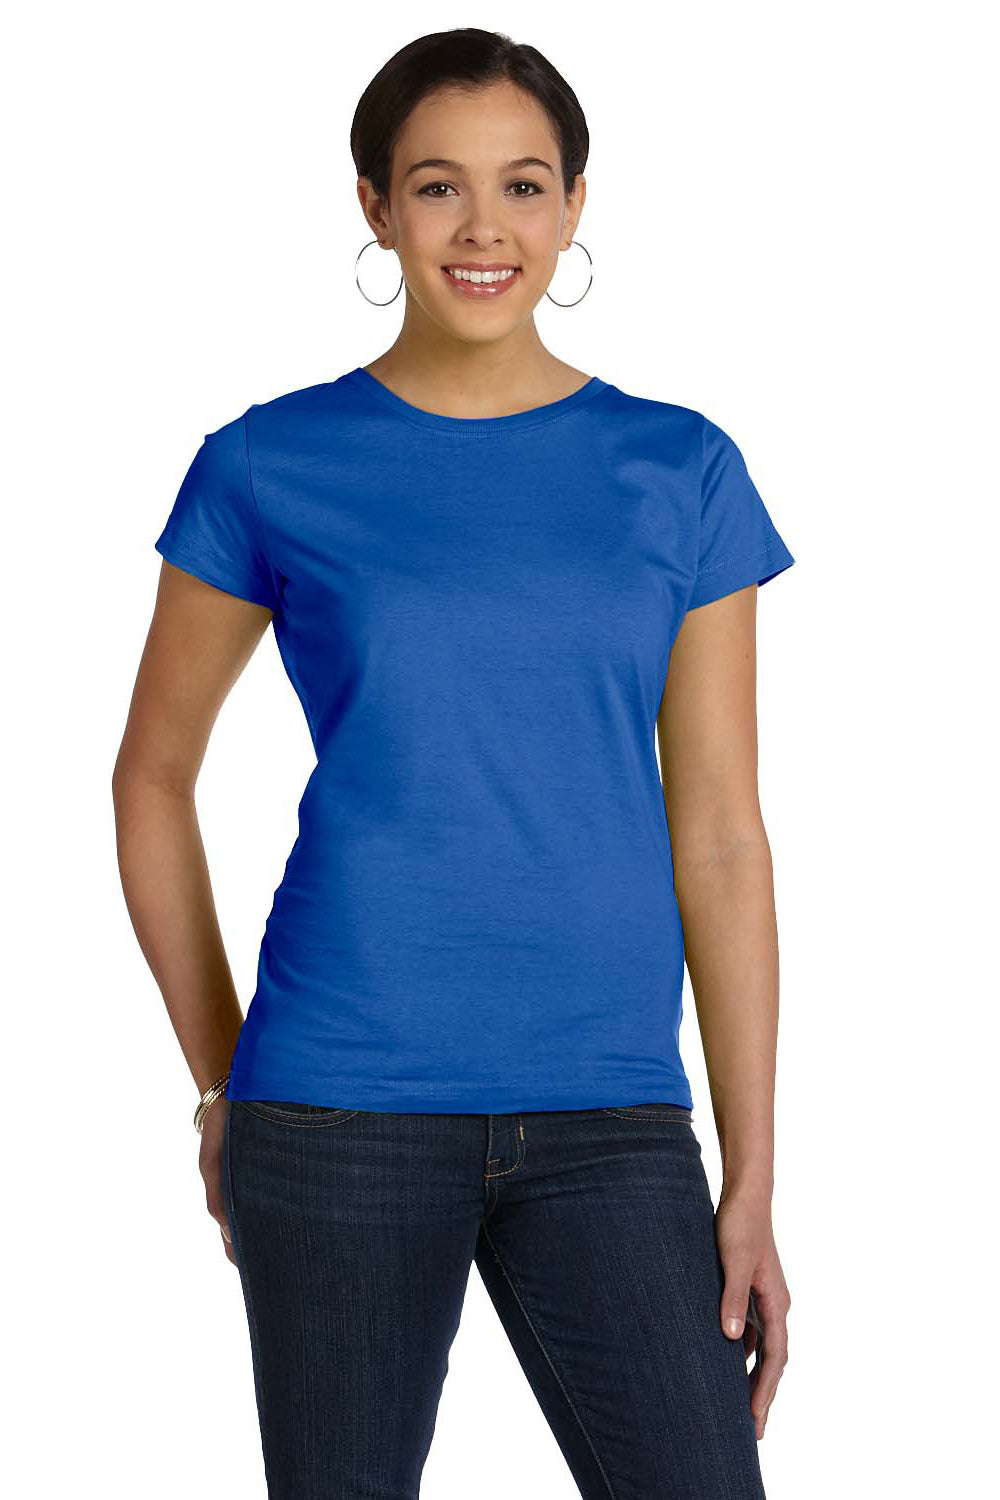 LAT 3516 Womens Fine Jersey Short Sleeve Crewneck T-Shirt Royal Blue Front